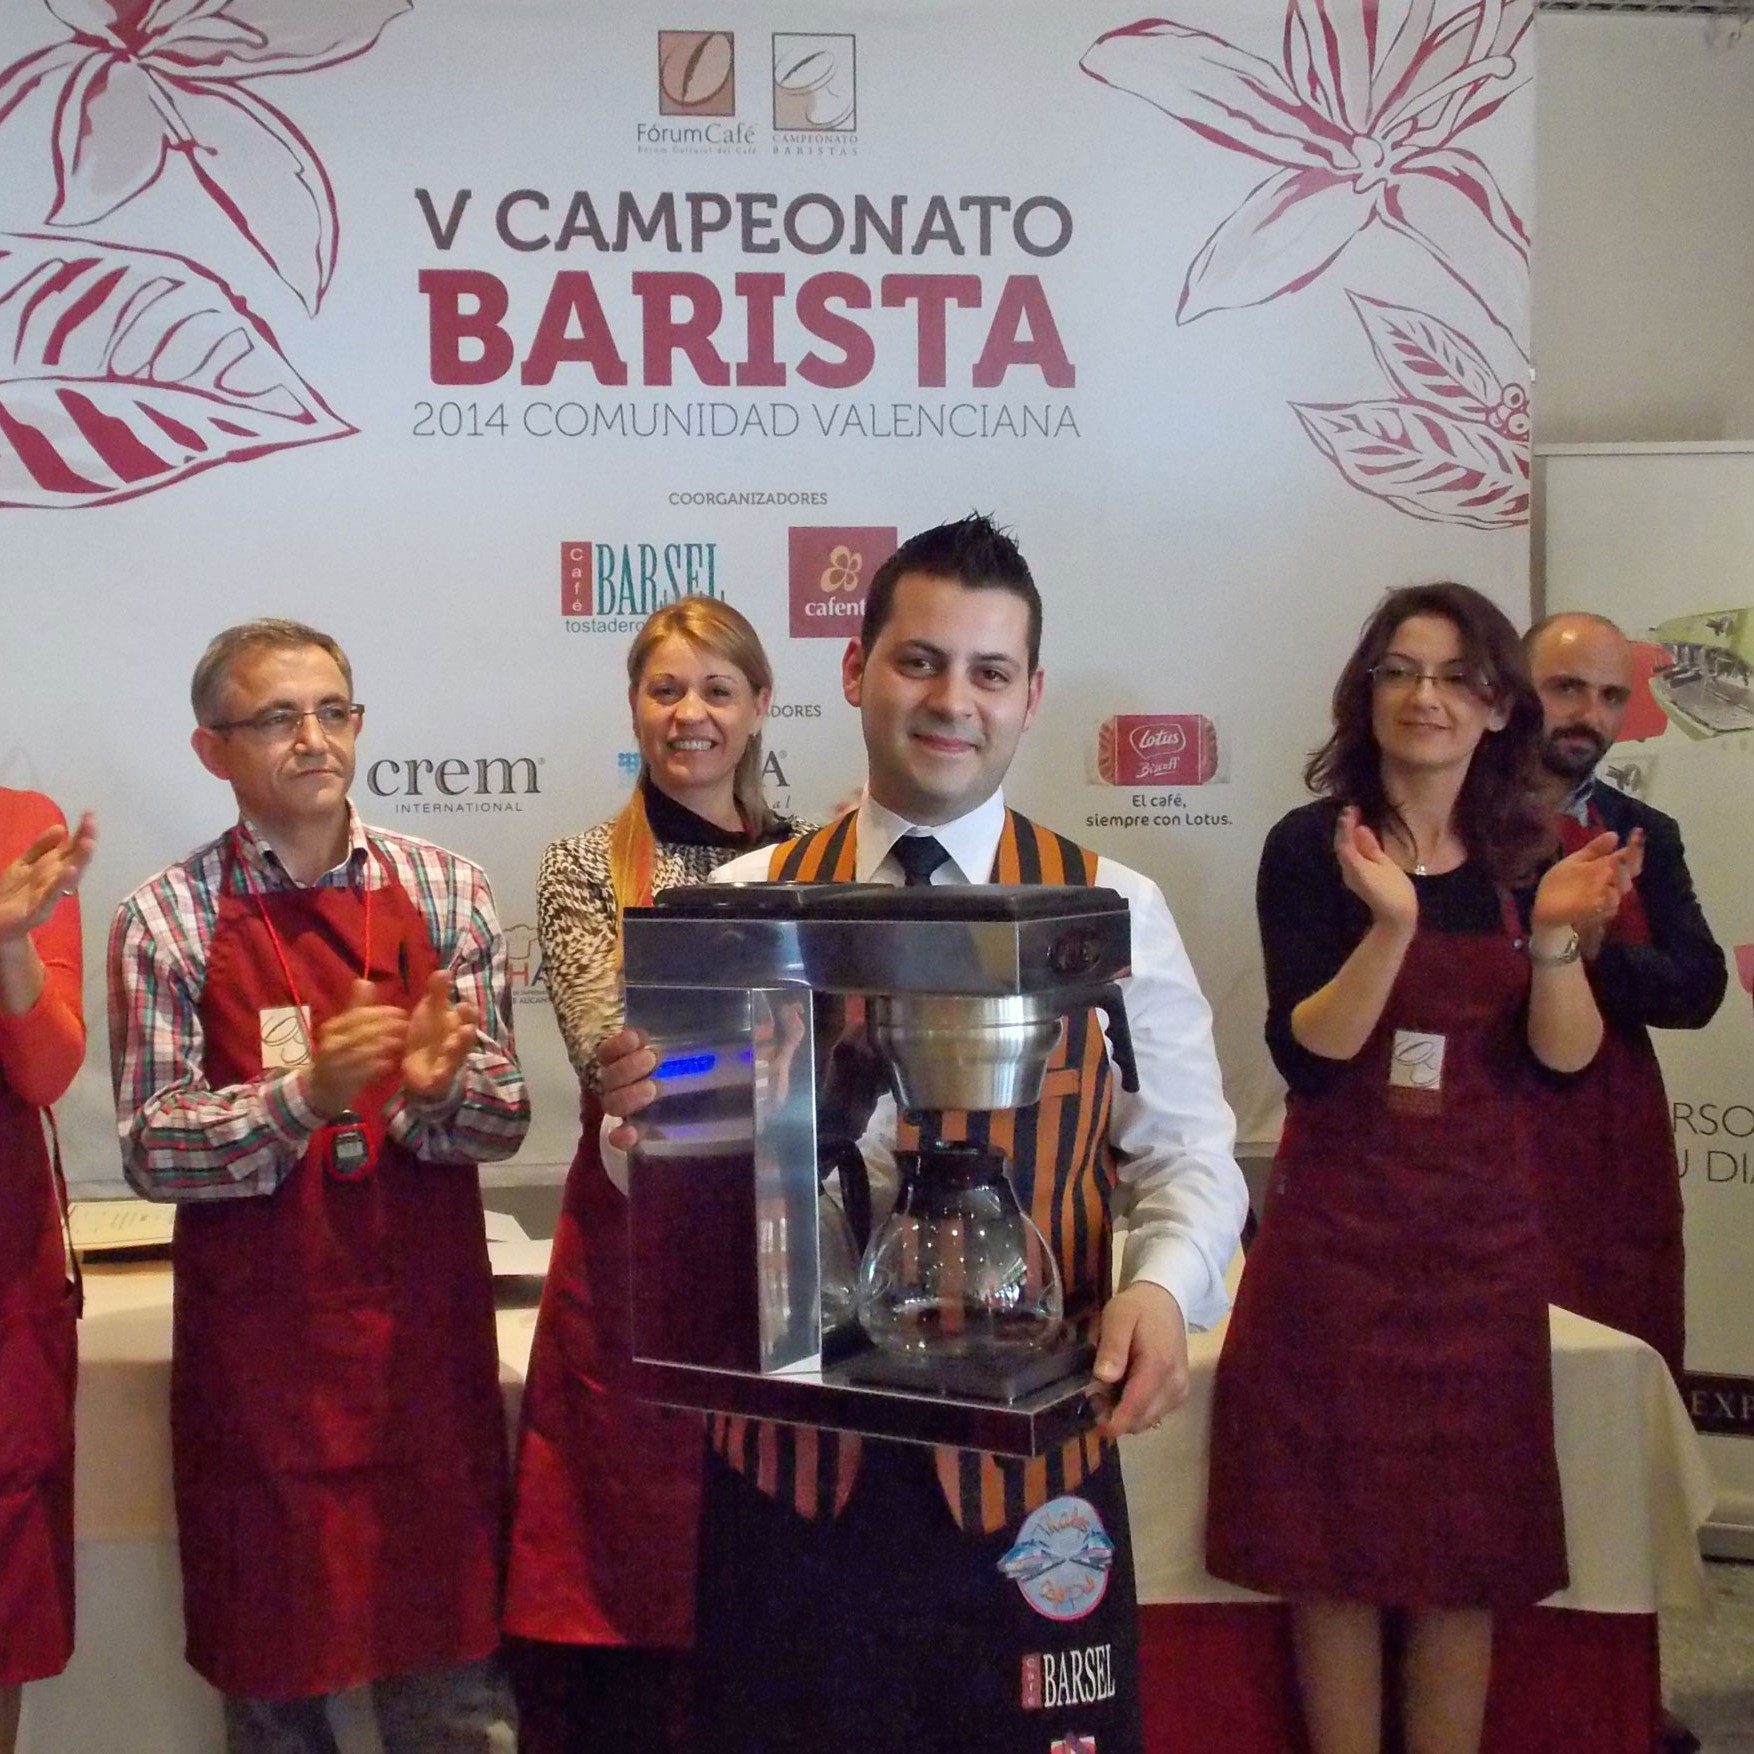 javier-carrion-campeon-barista-valencia-2014